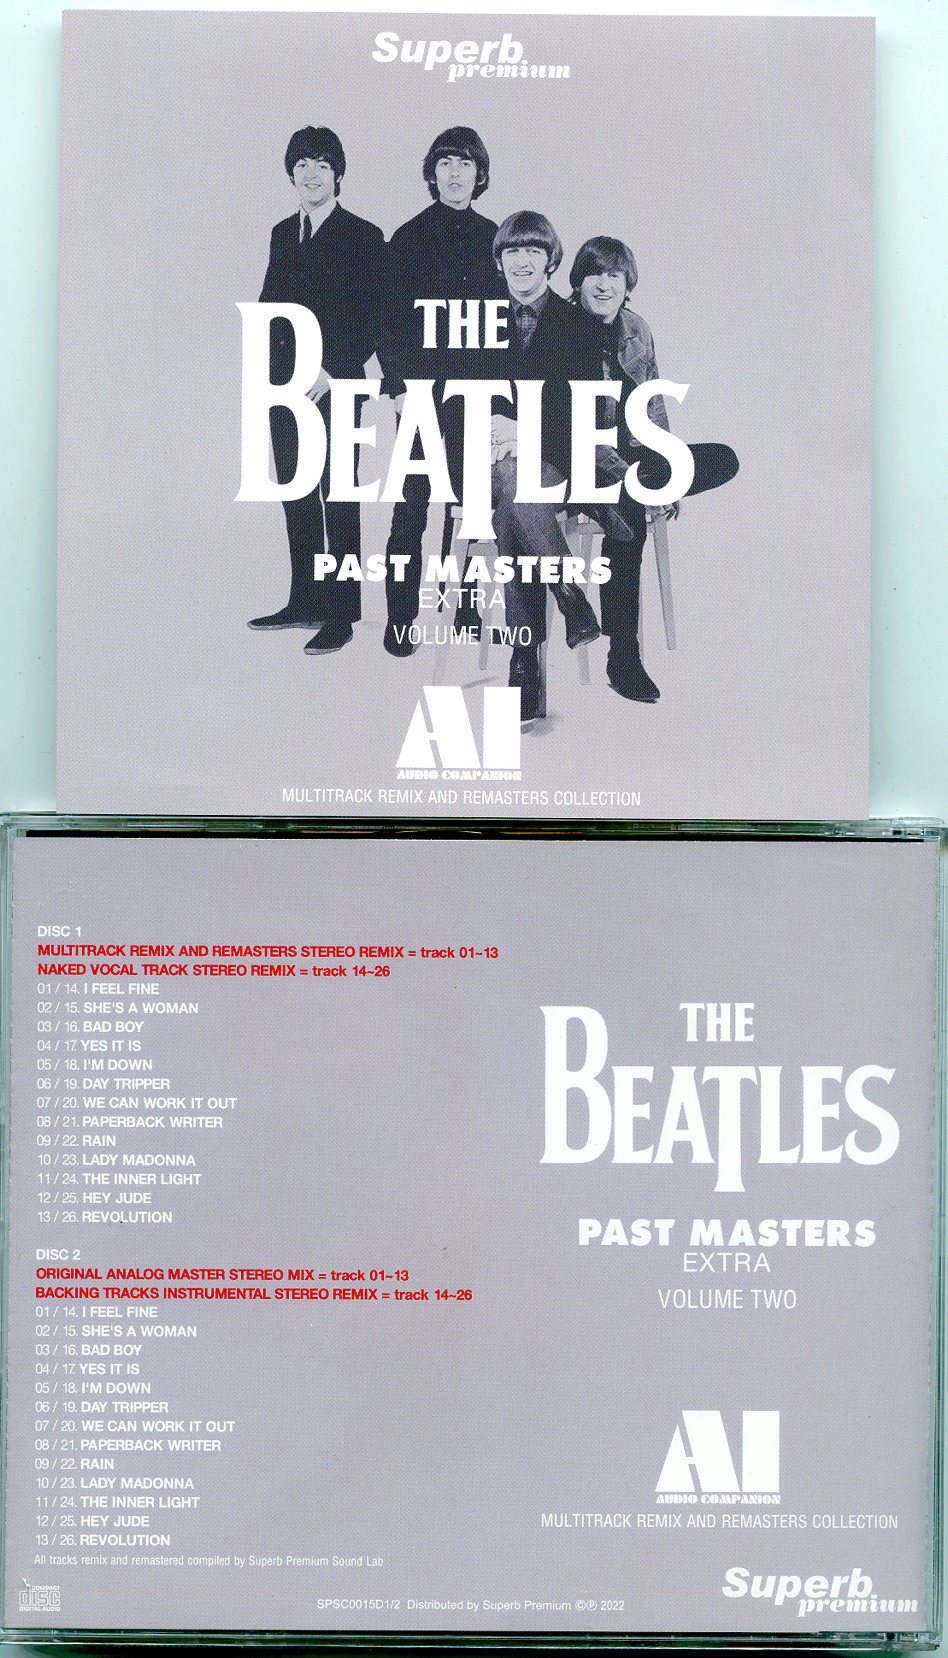 The Beatles - Past Masters Vol 2 Audio Companion Multitrack Remix 